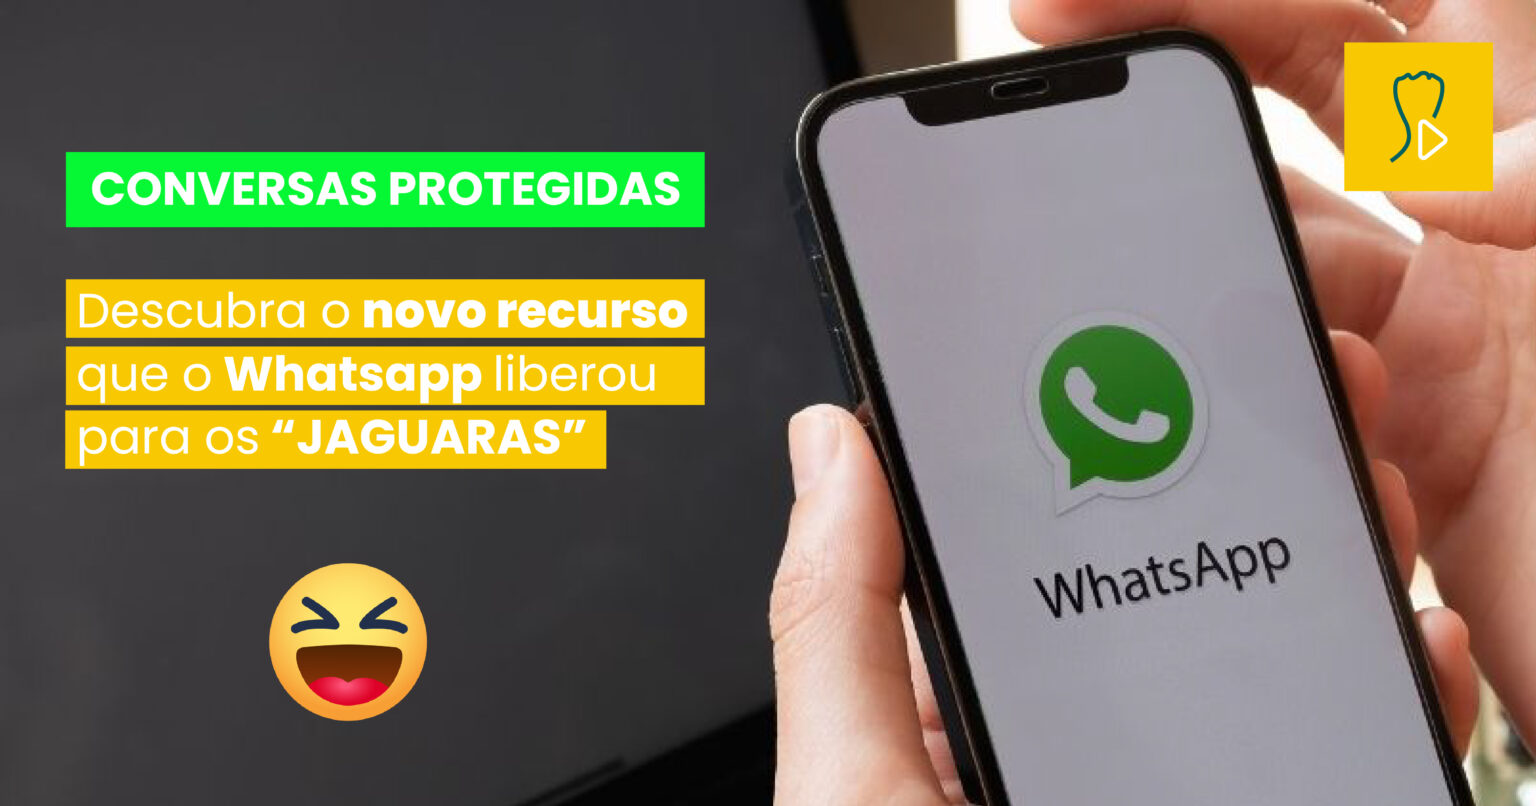 Conversas protegidas – Descubra o novo recurso que o Whatsapp liberou!